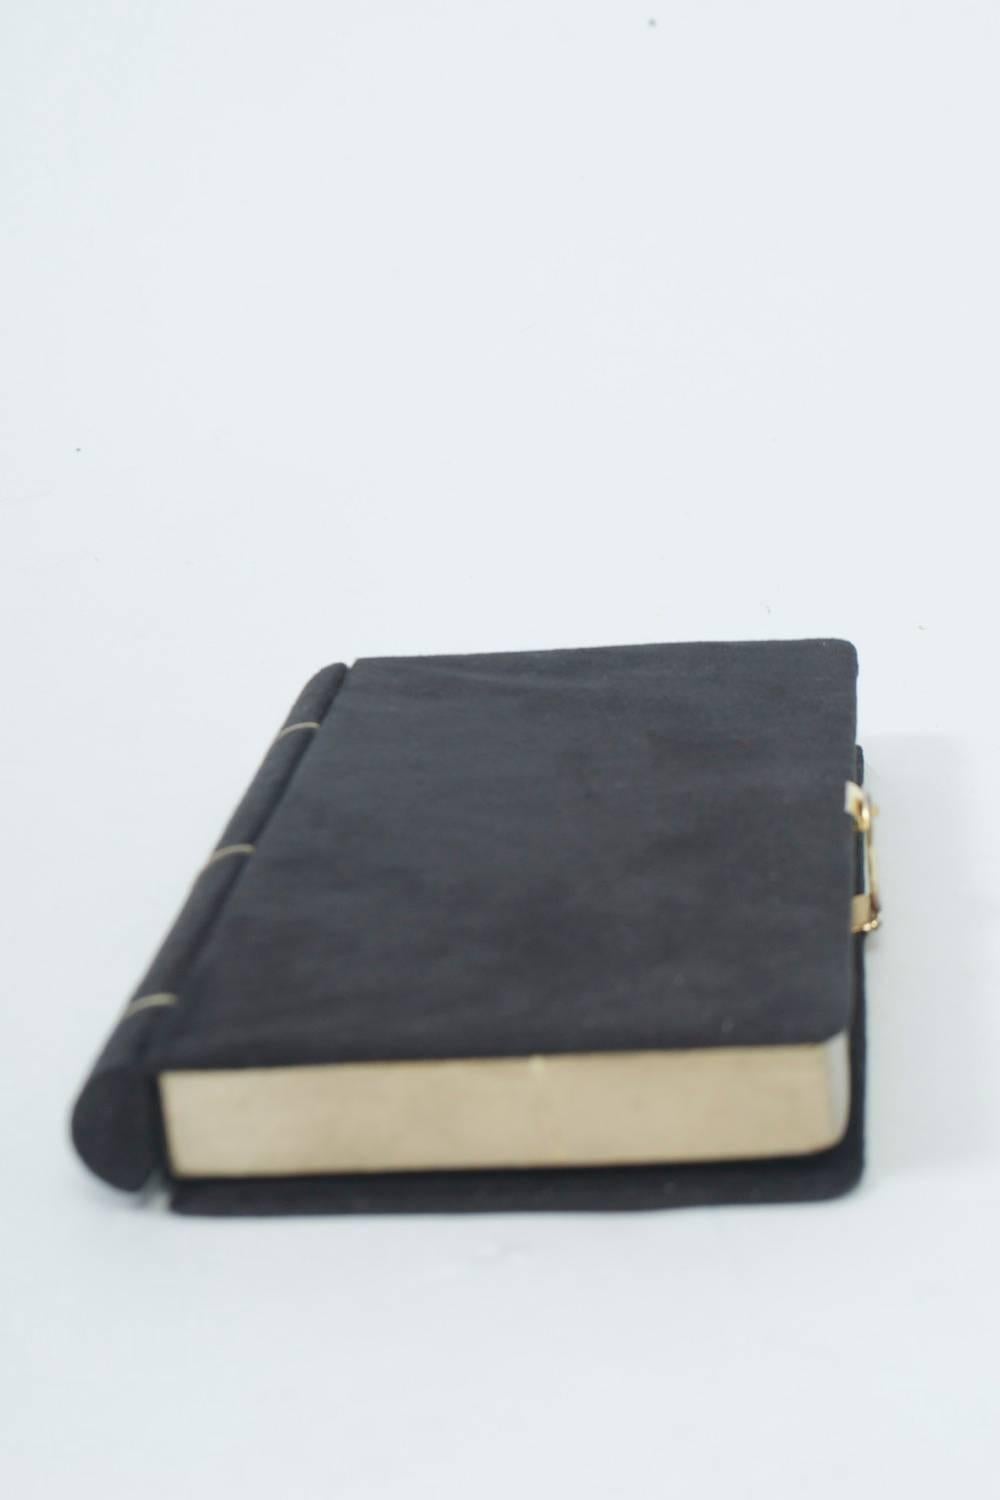 Black Suede Book Clutch, France 2